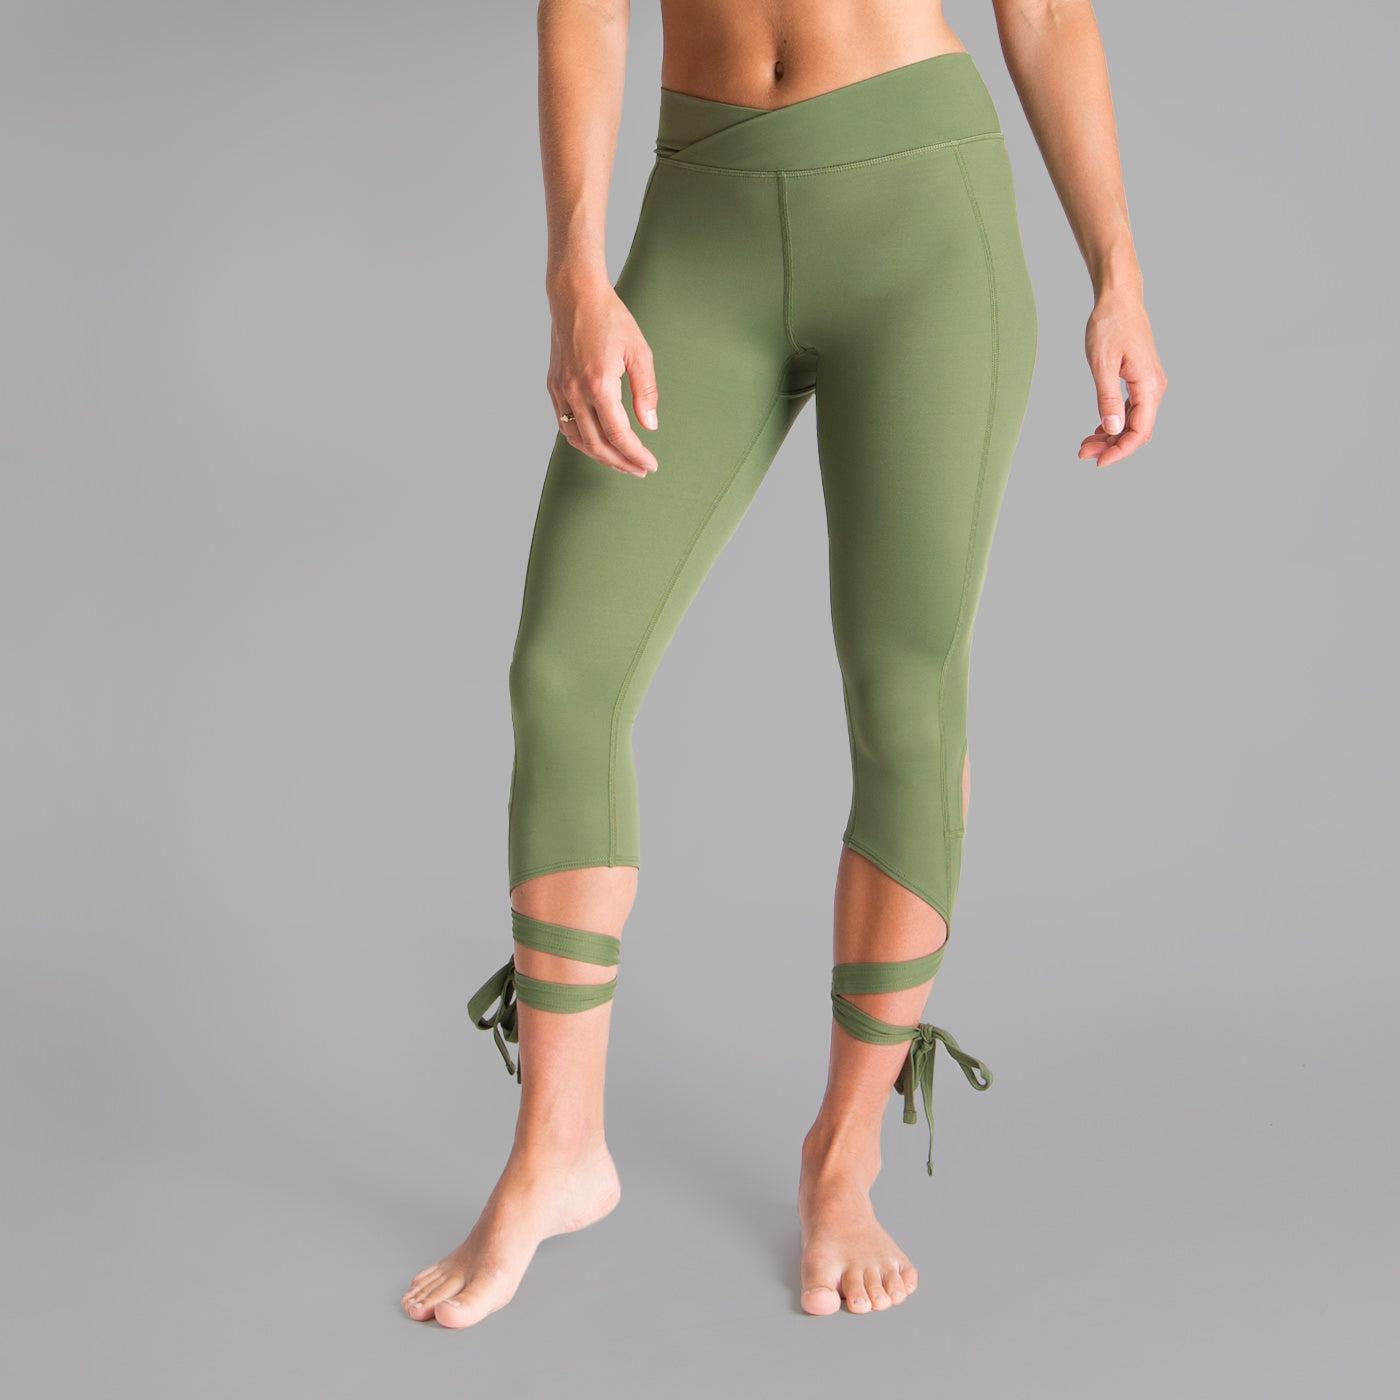 Hey Nuts Essential capri army green leggings size 8/10 M